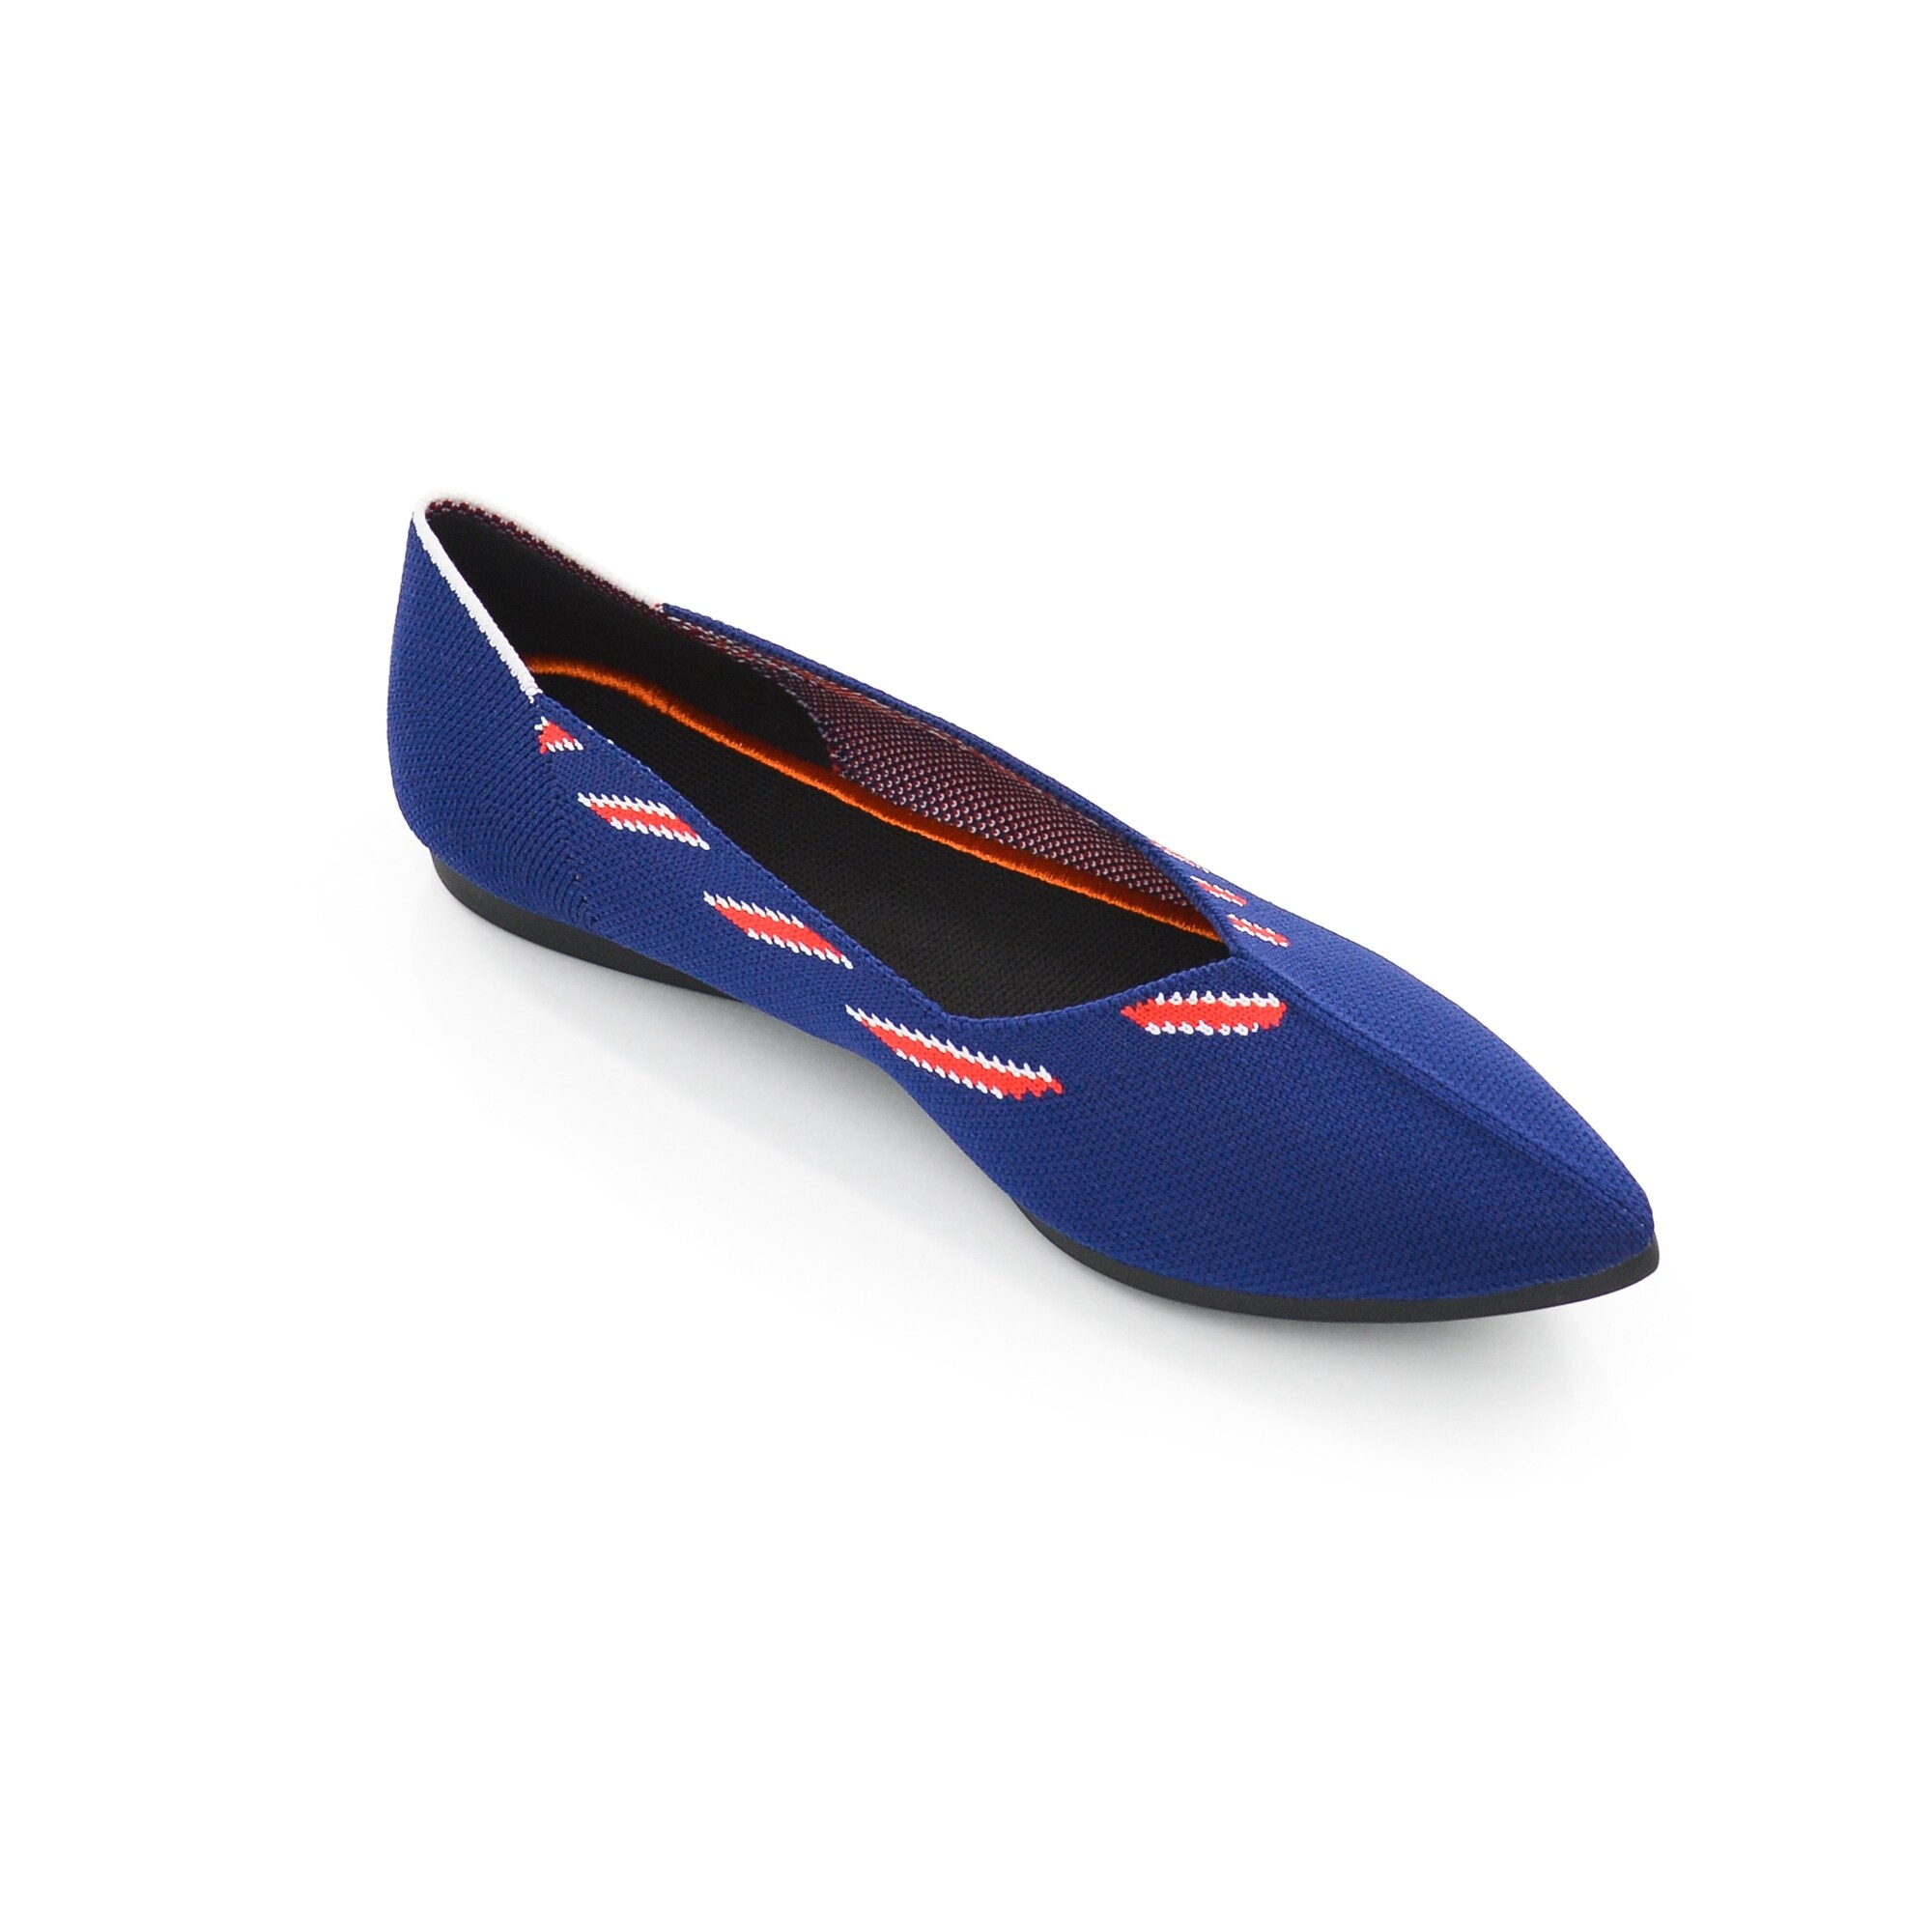 womens navy blue flat dress shoes